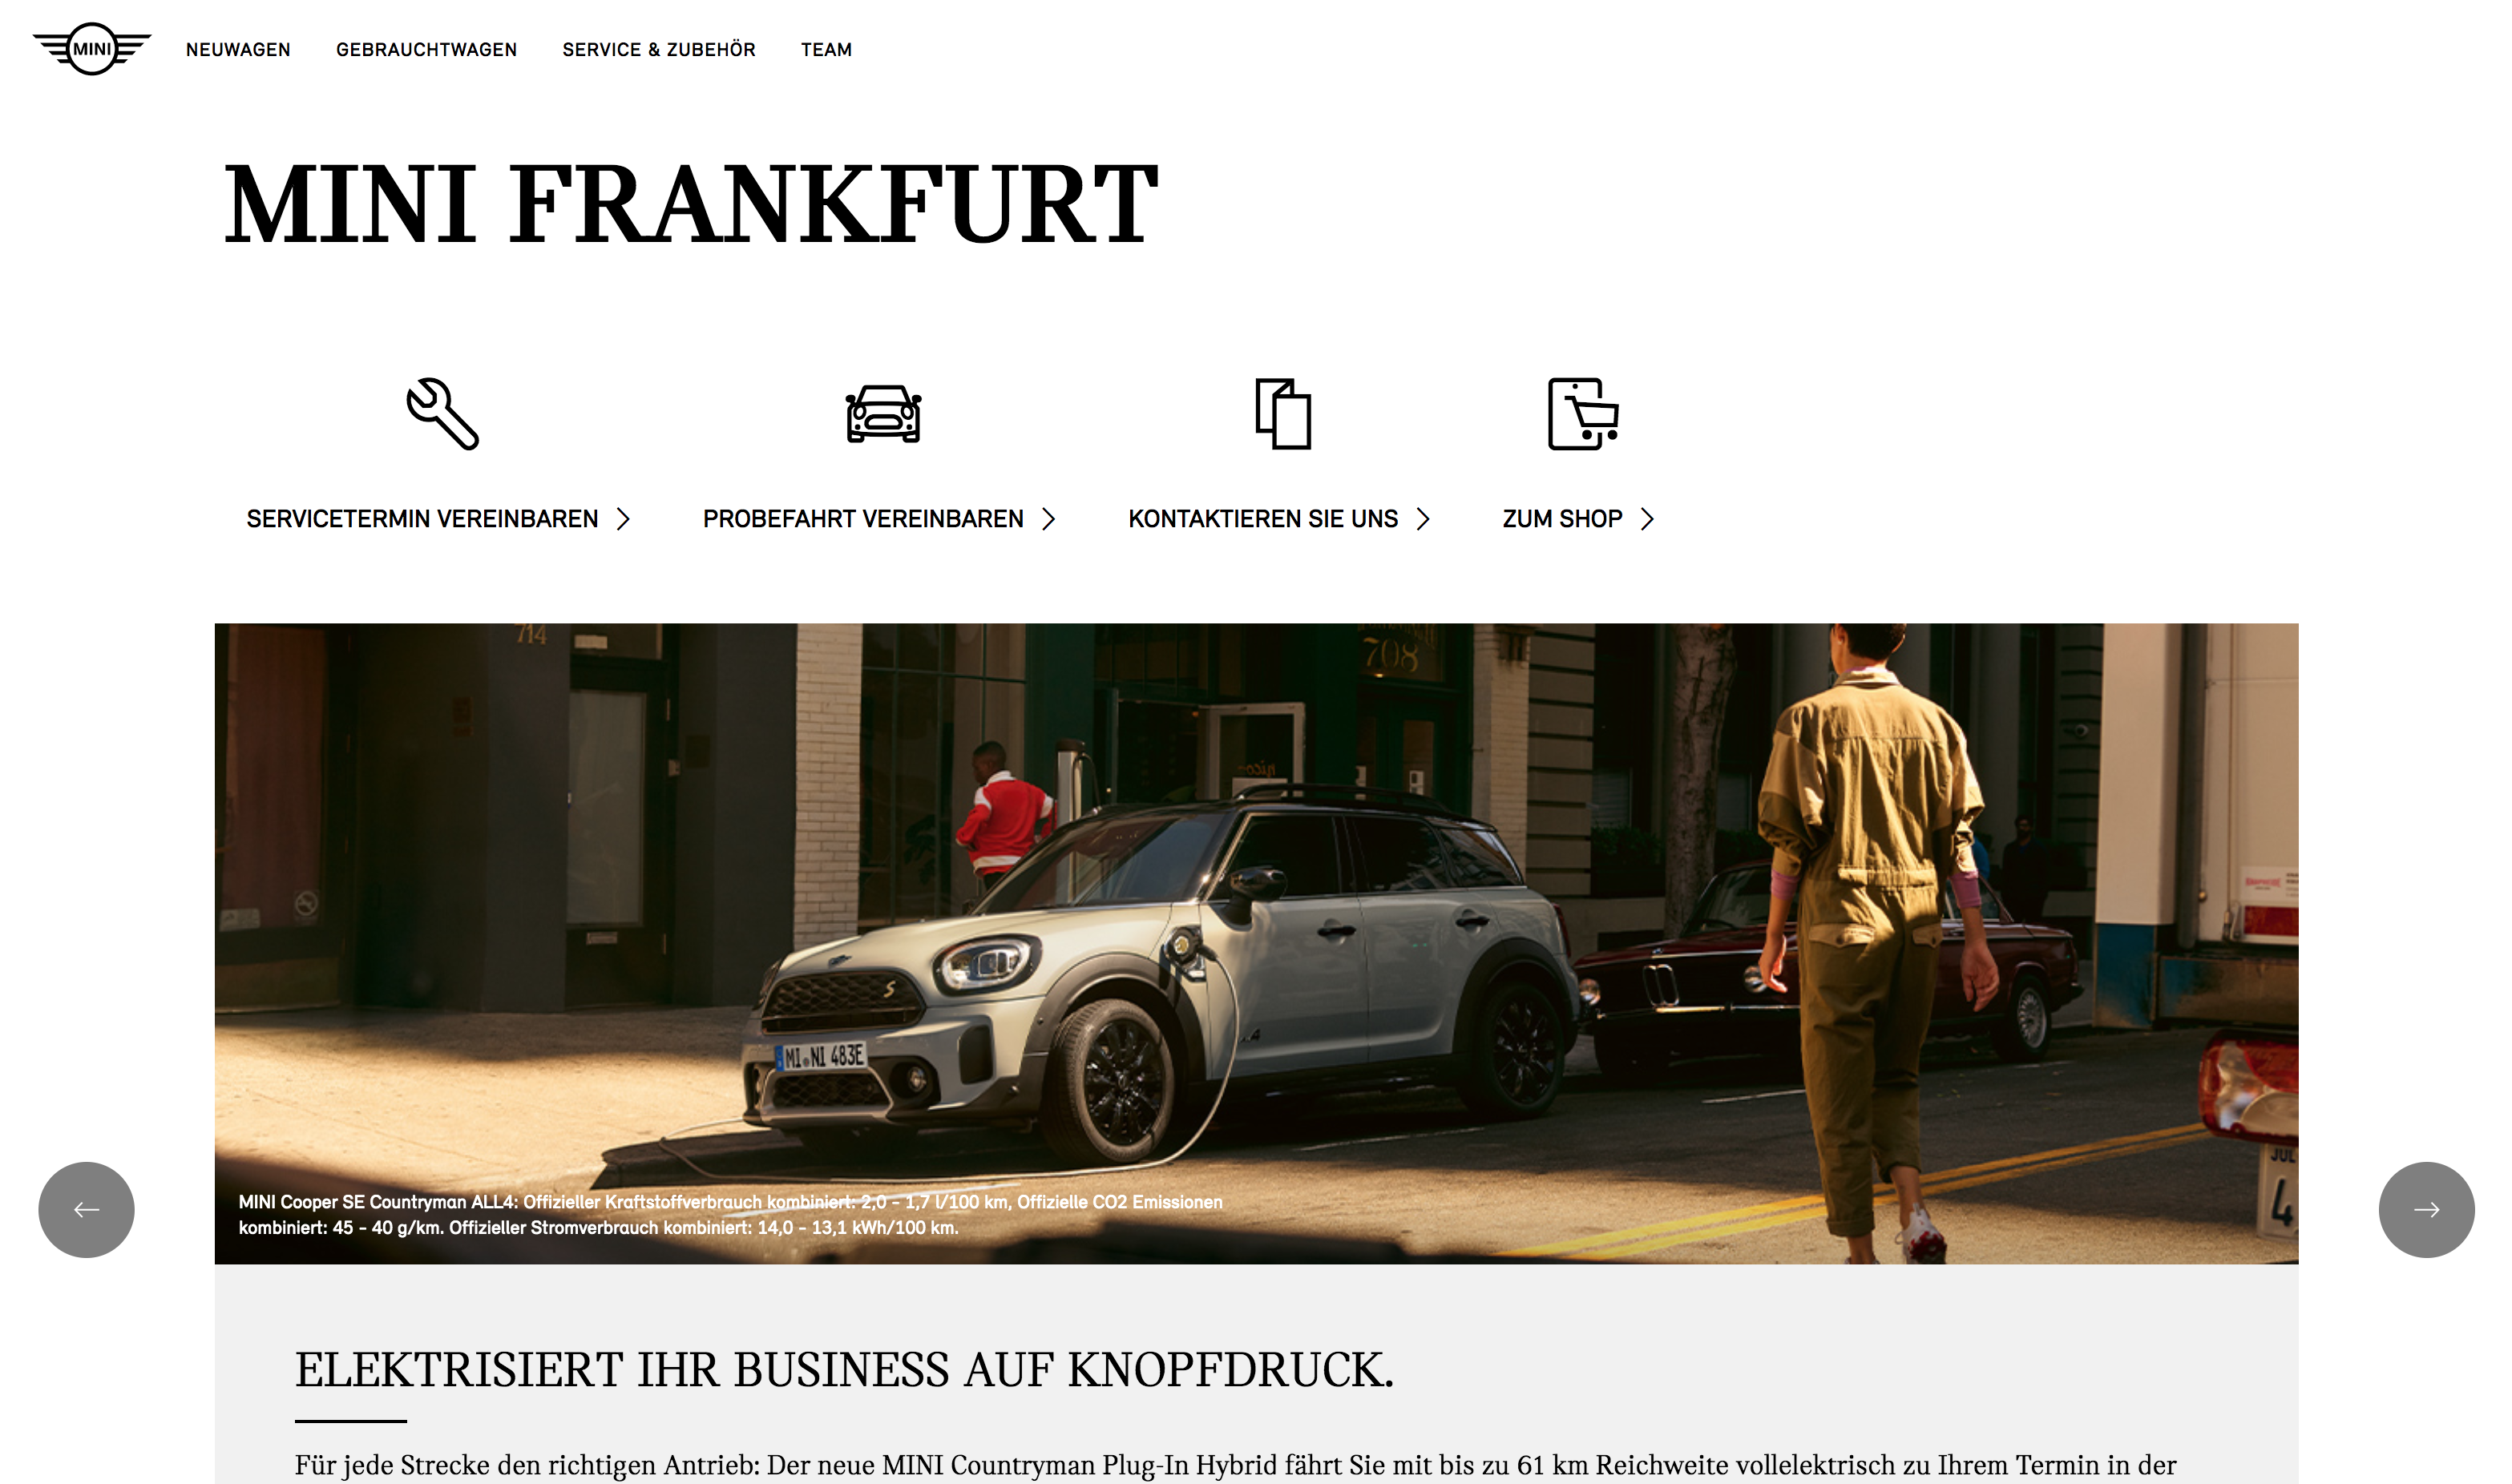 Brilliant website that showcases Mini's Frankfurt dealership